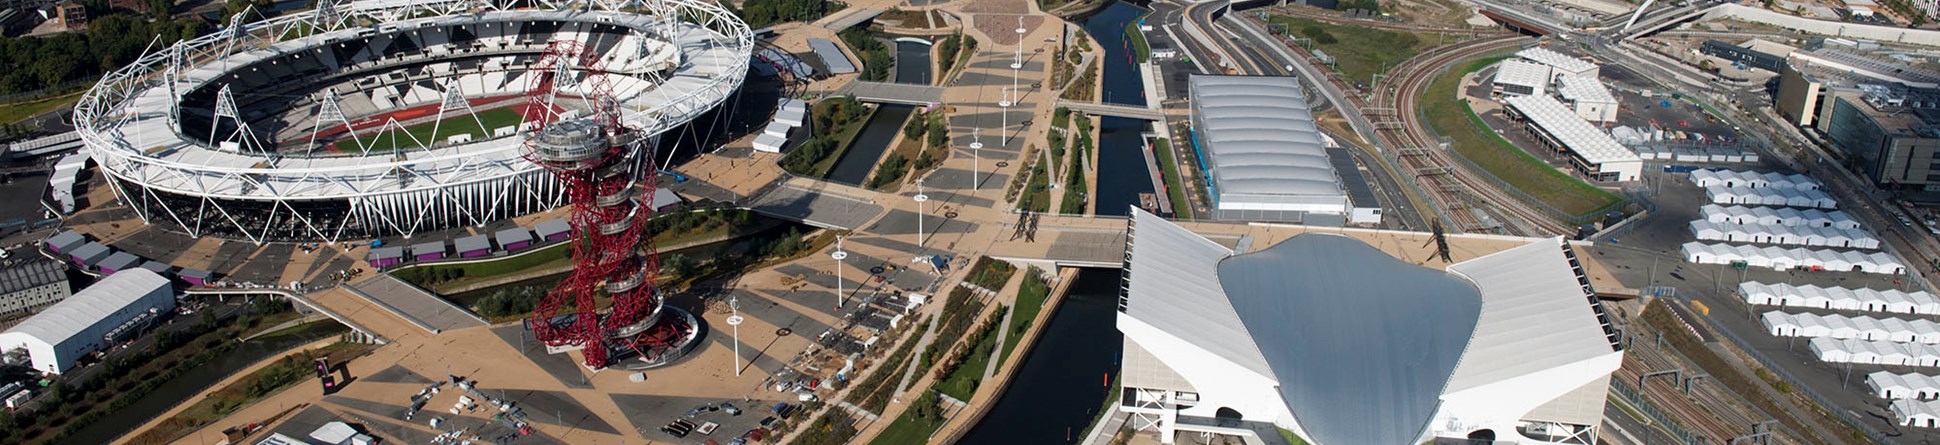 Aerial view of Queen Elizabeth Olympic Park, Stratford in East London